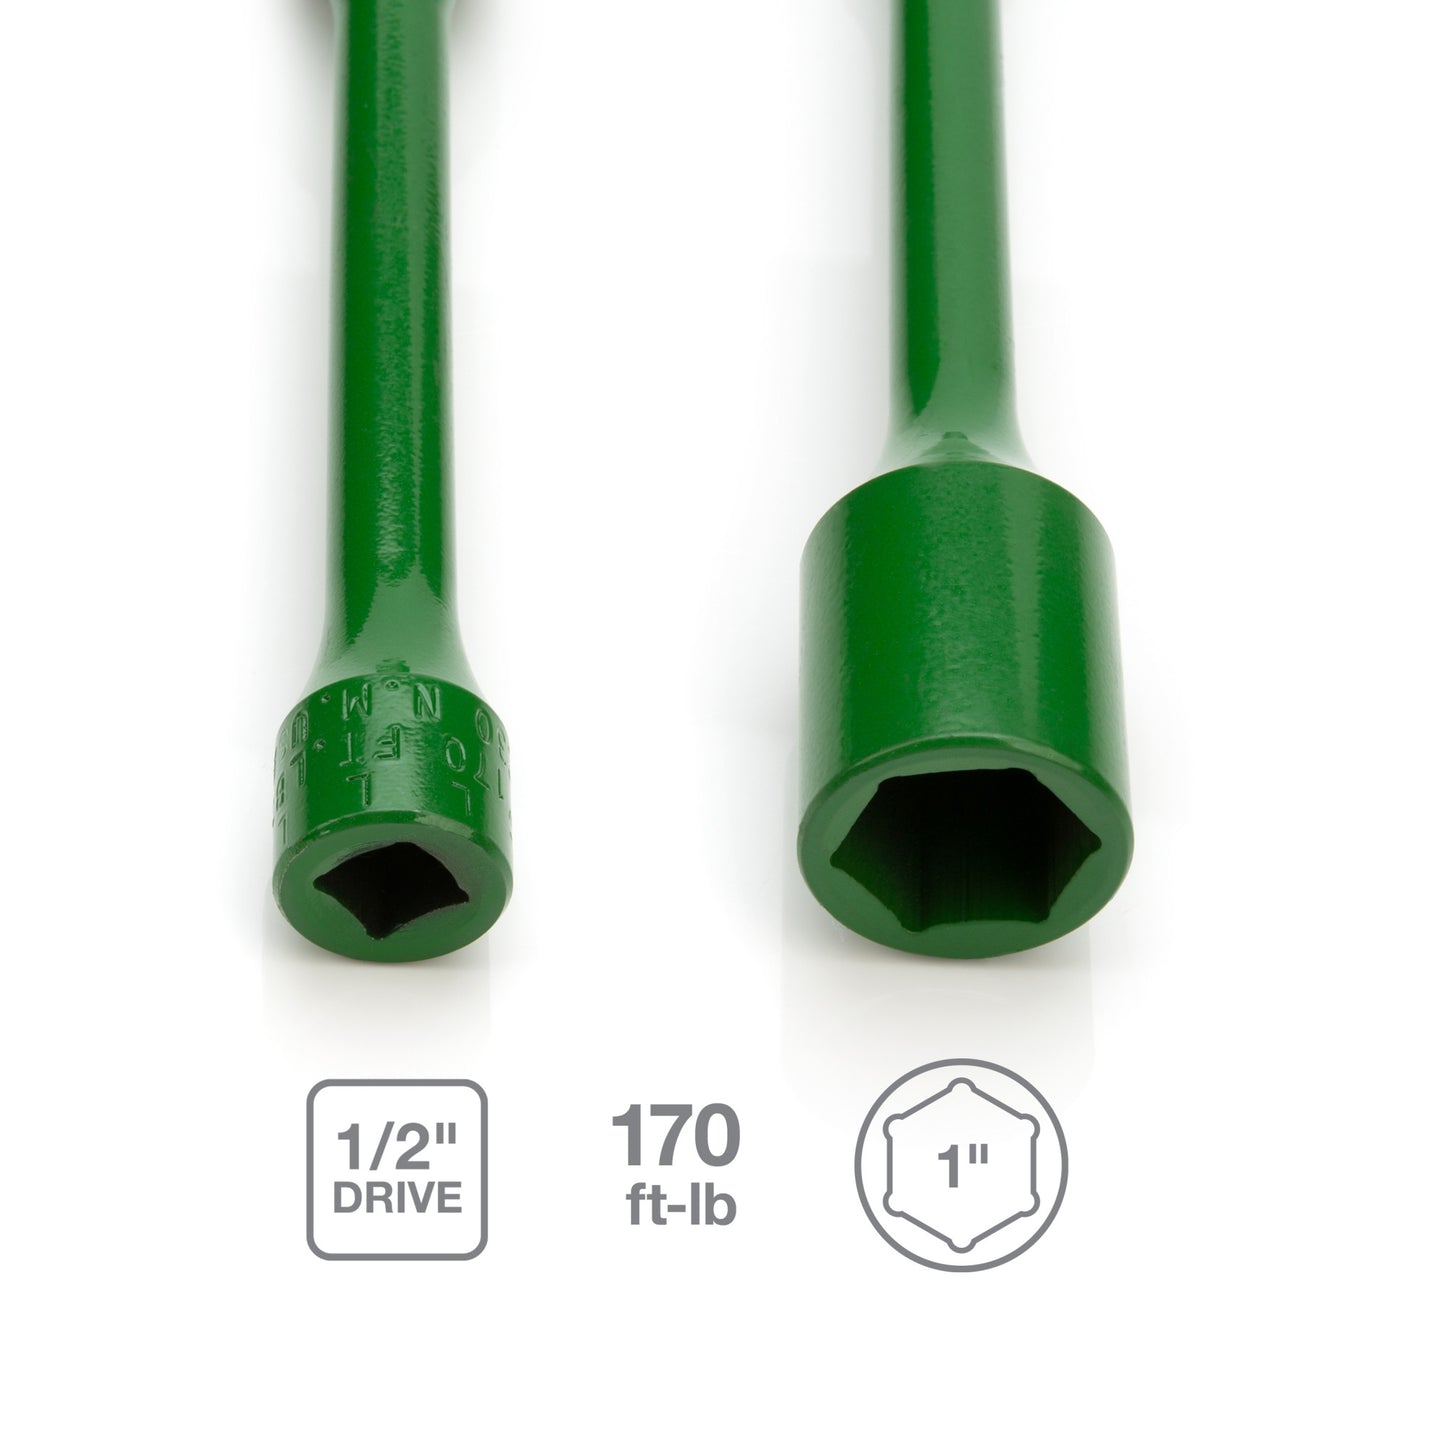 1/2-inch Drive x 1-inch 170 ft-lb Torque Stick - Green